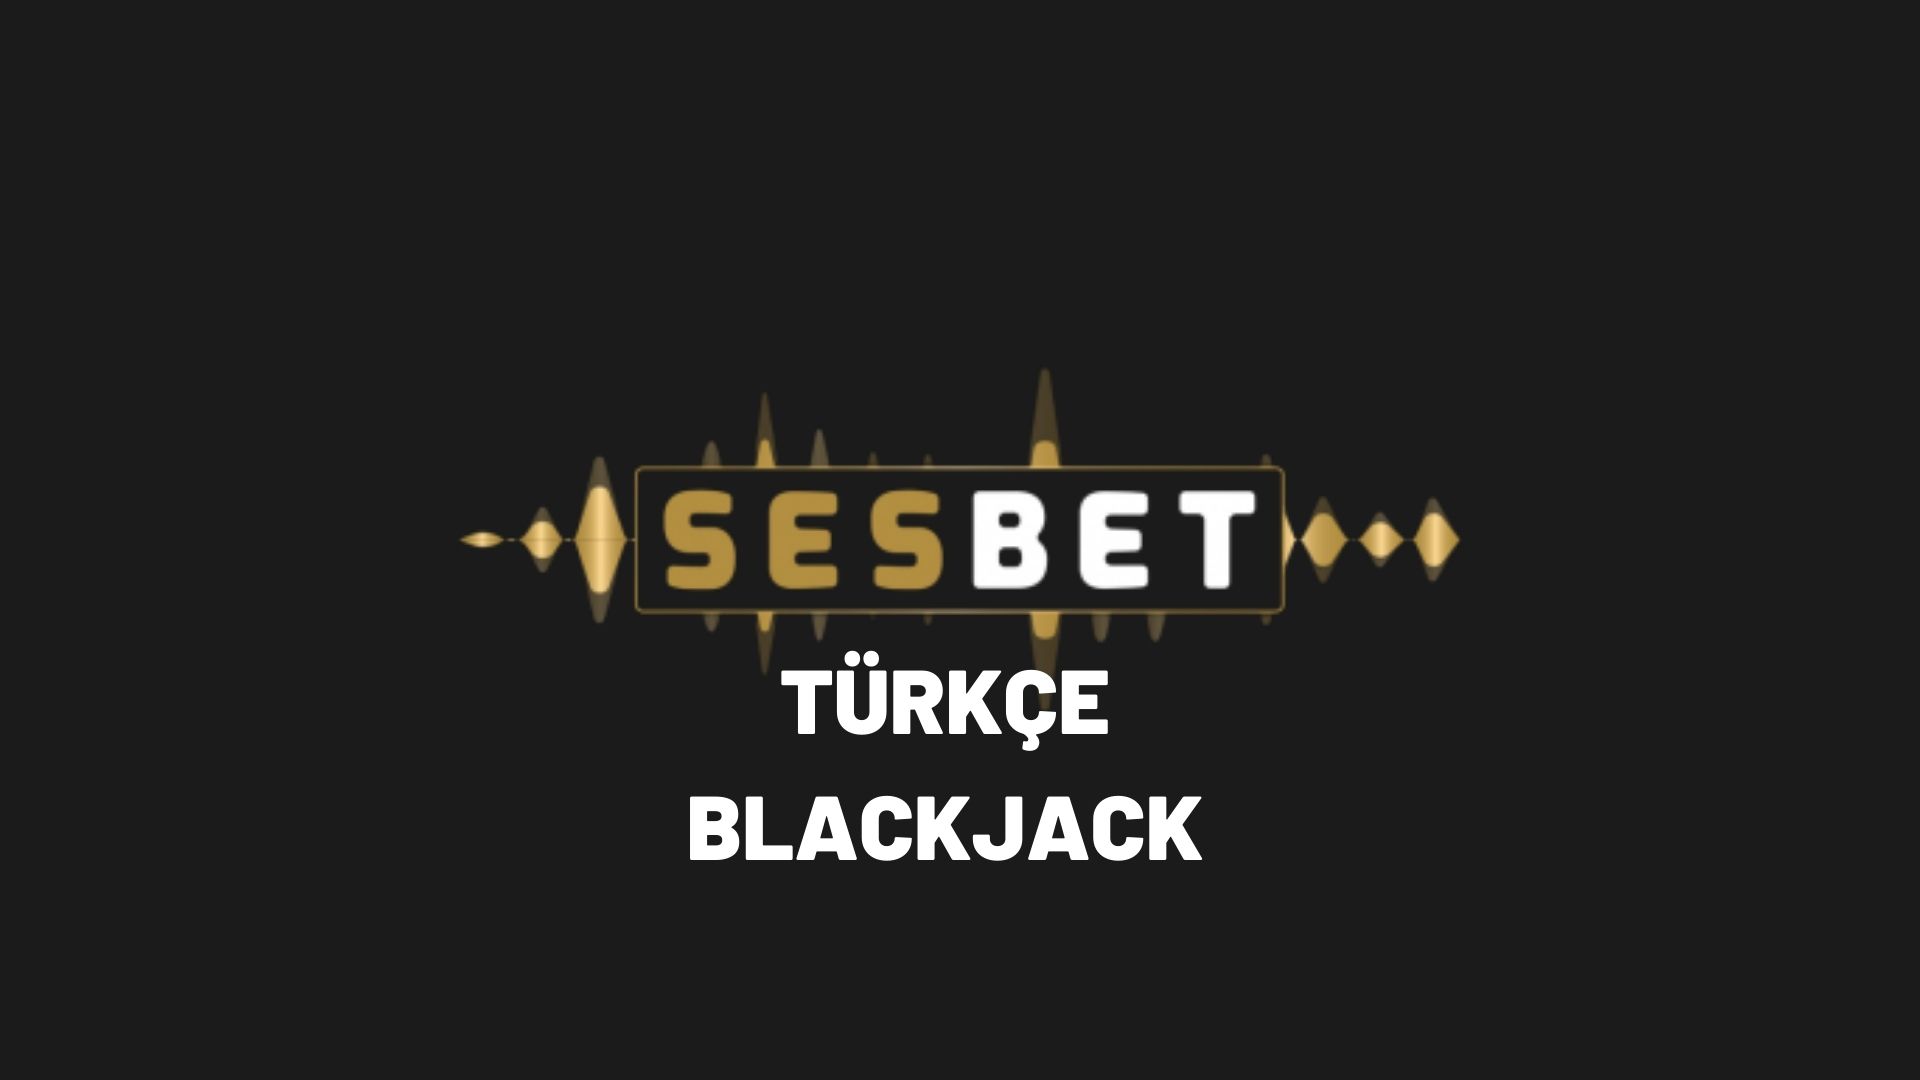 sesbet-turkce-blackjack